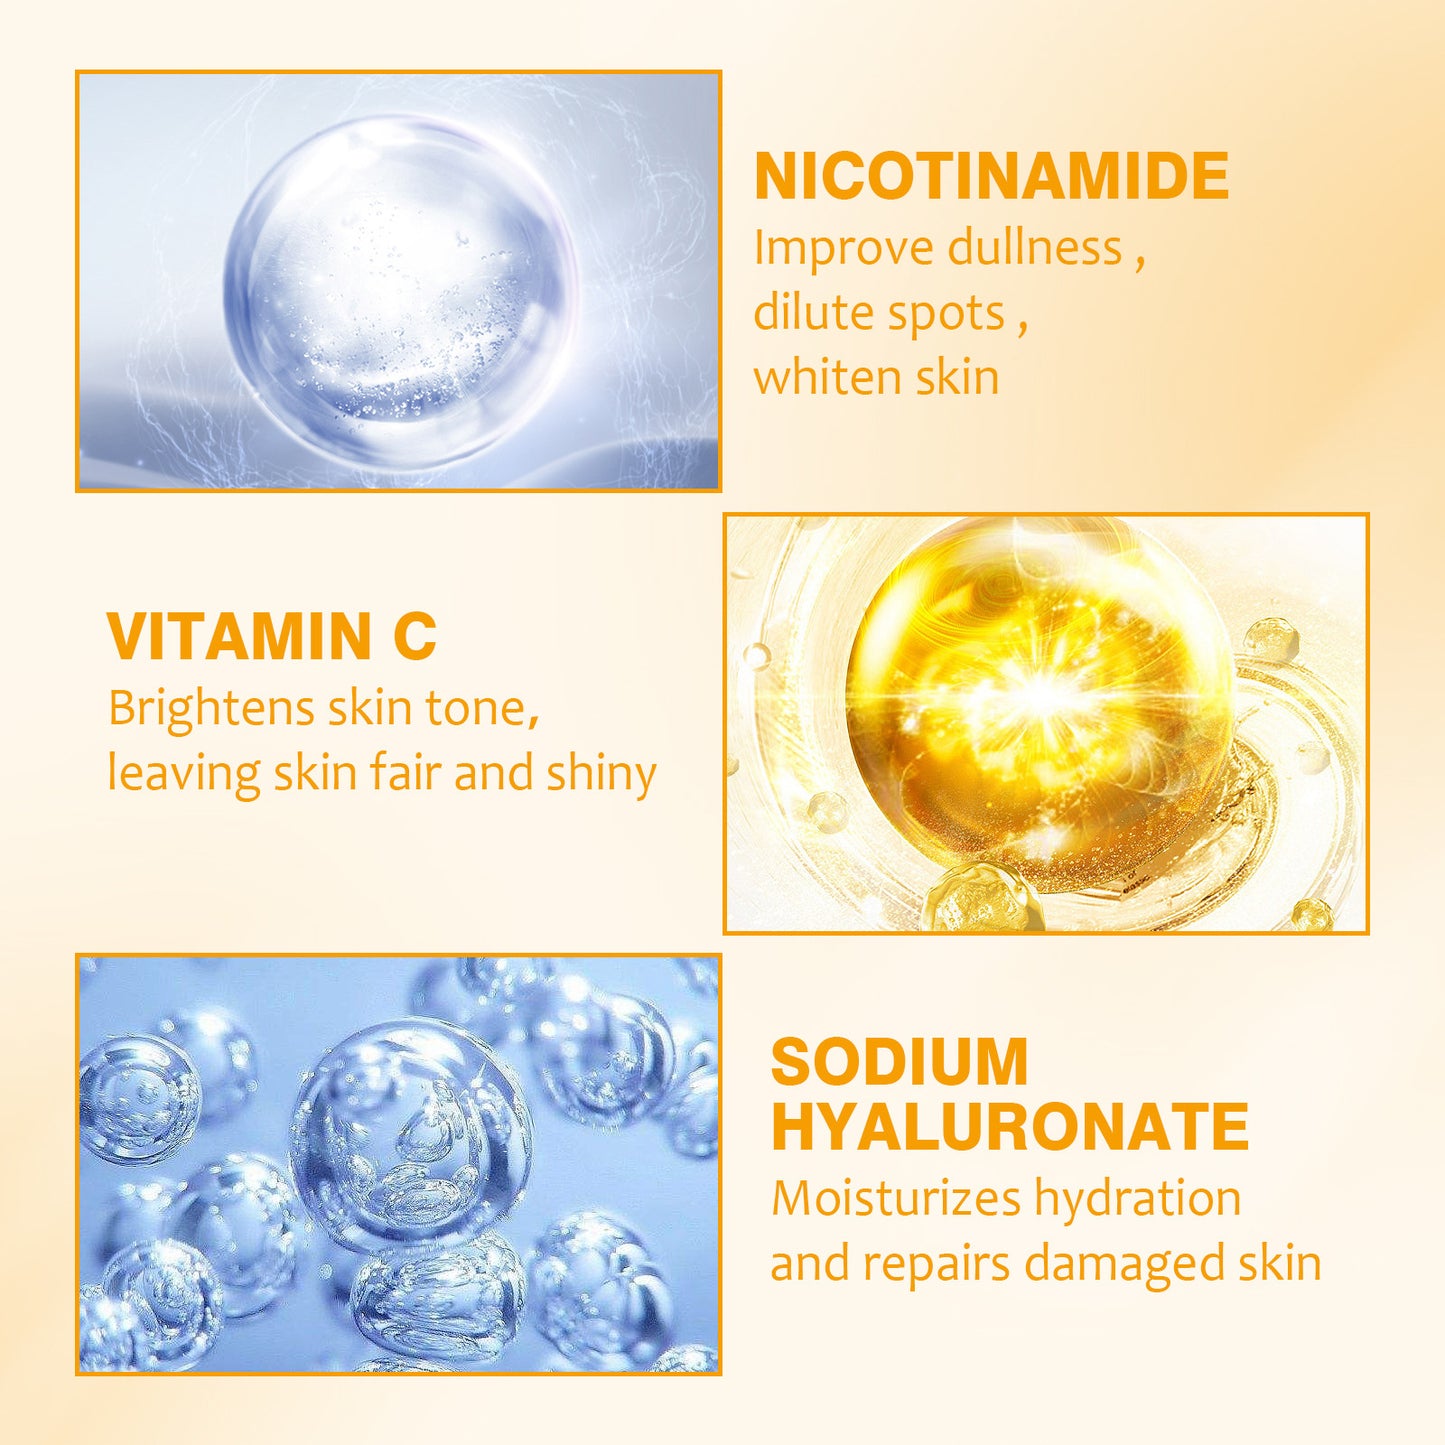 OUHOE Vitamin C Serum VC Essence Desalination Fine Grain Moisturizing and Skin Sparkle